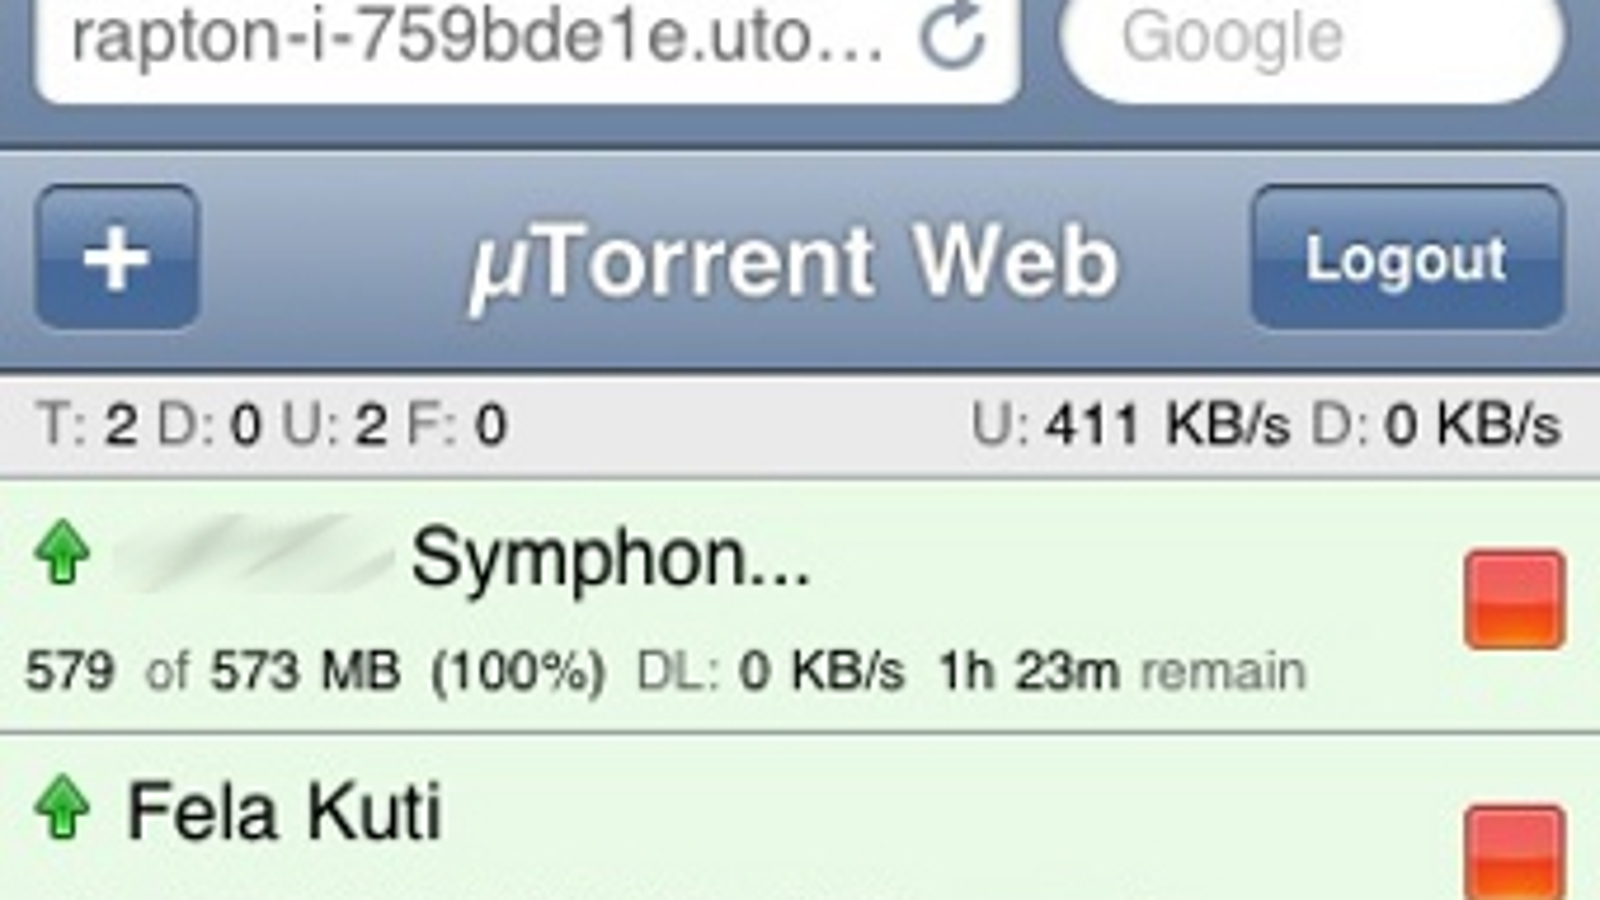 change utorrent download location android